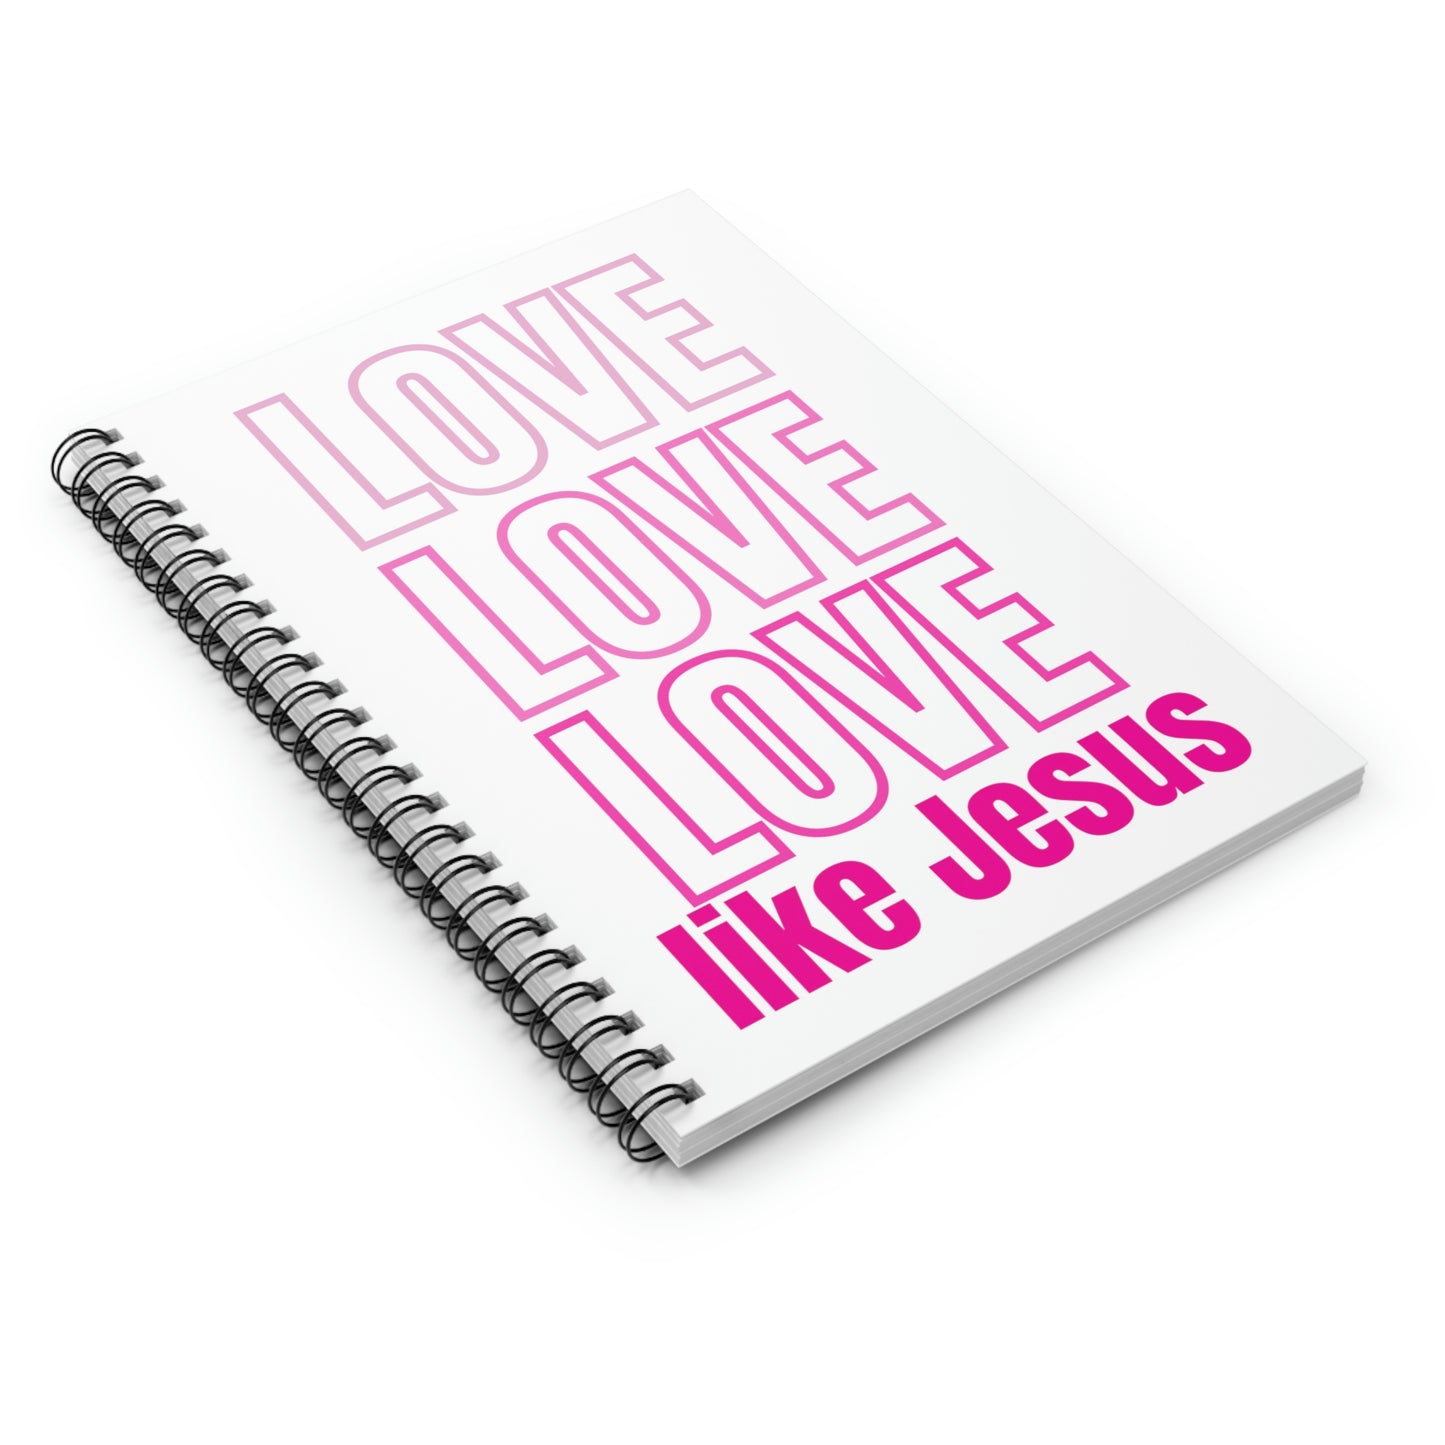 Pink Love Like Jesus Blank Notebook, Minimalist Prayer Journal, Bible Journal, Christian Merch Spiral Notebook - Ruled Line